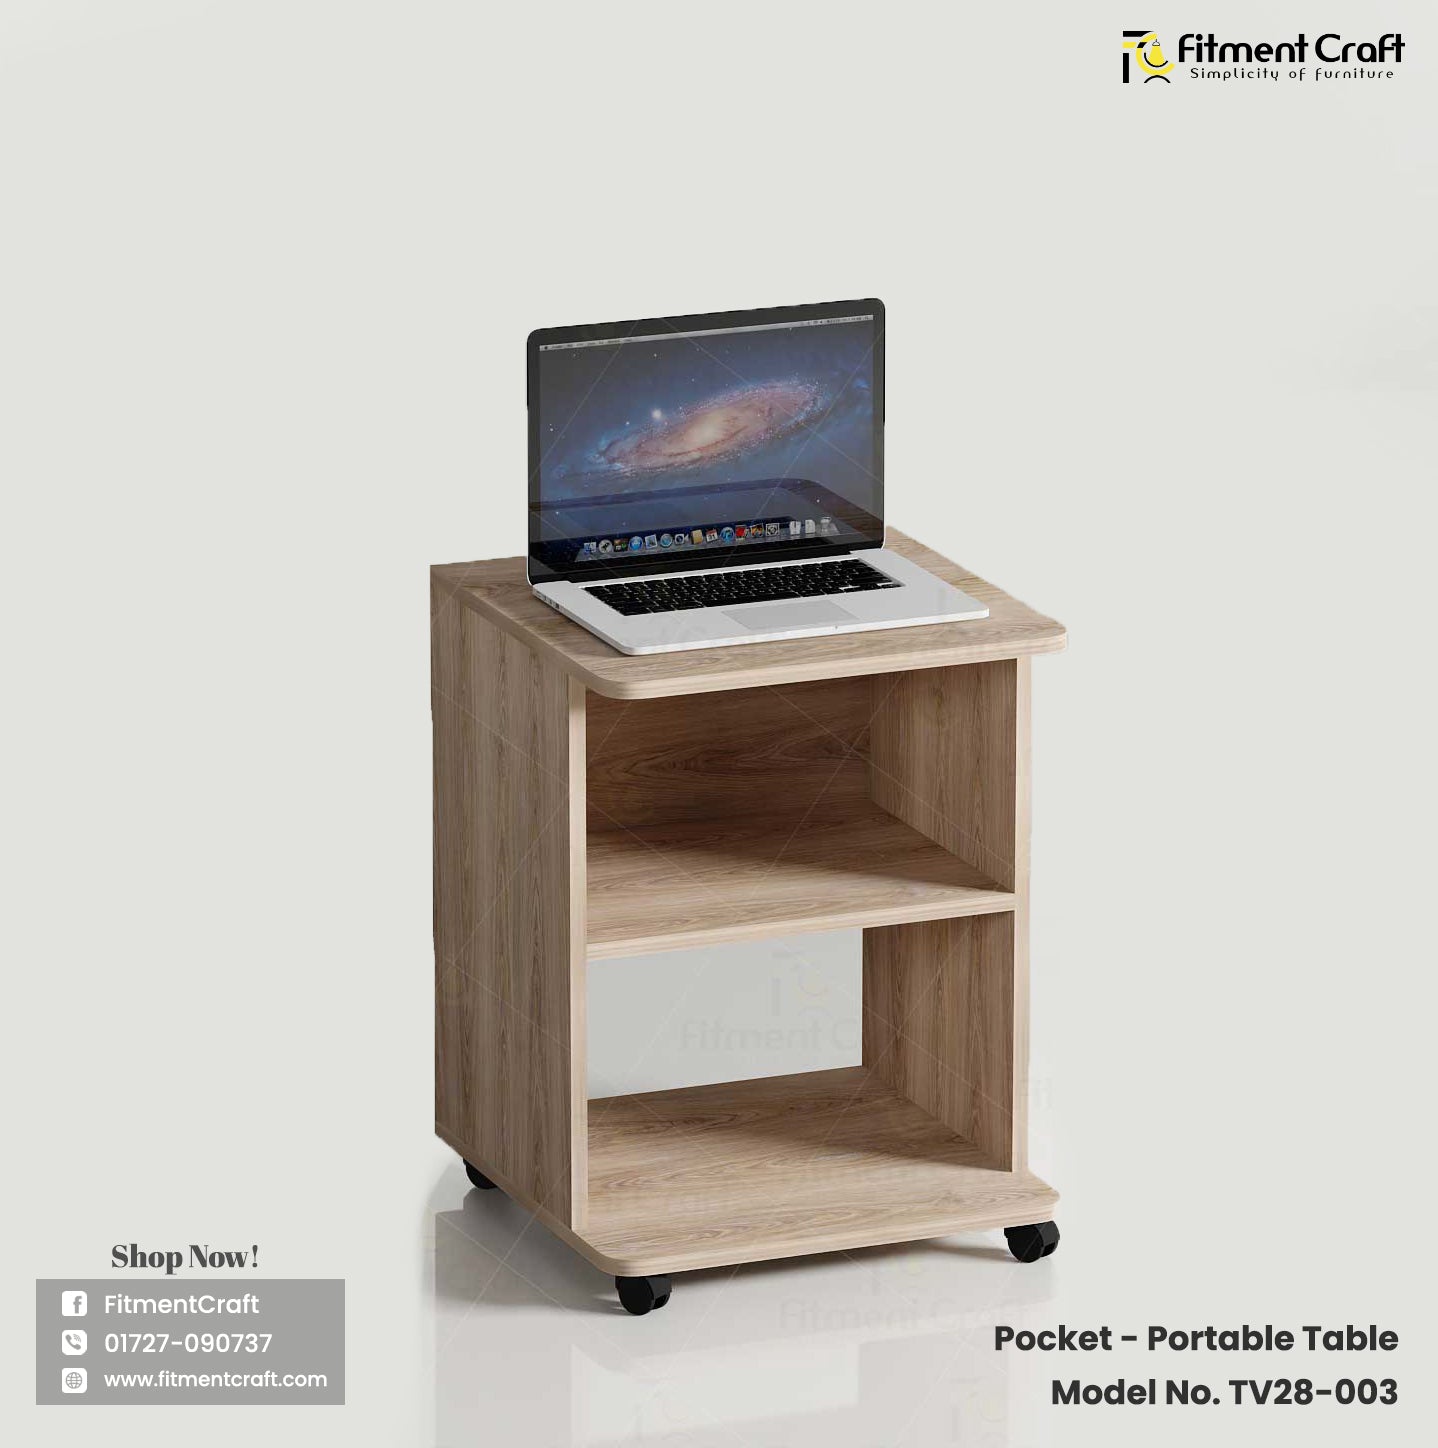 Pocket - Portable Table | TV28-003